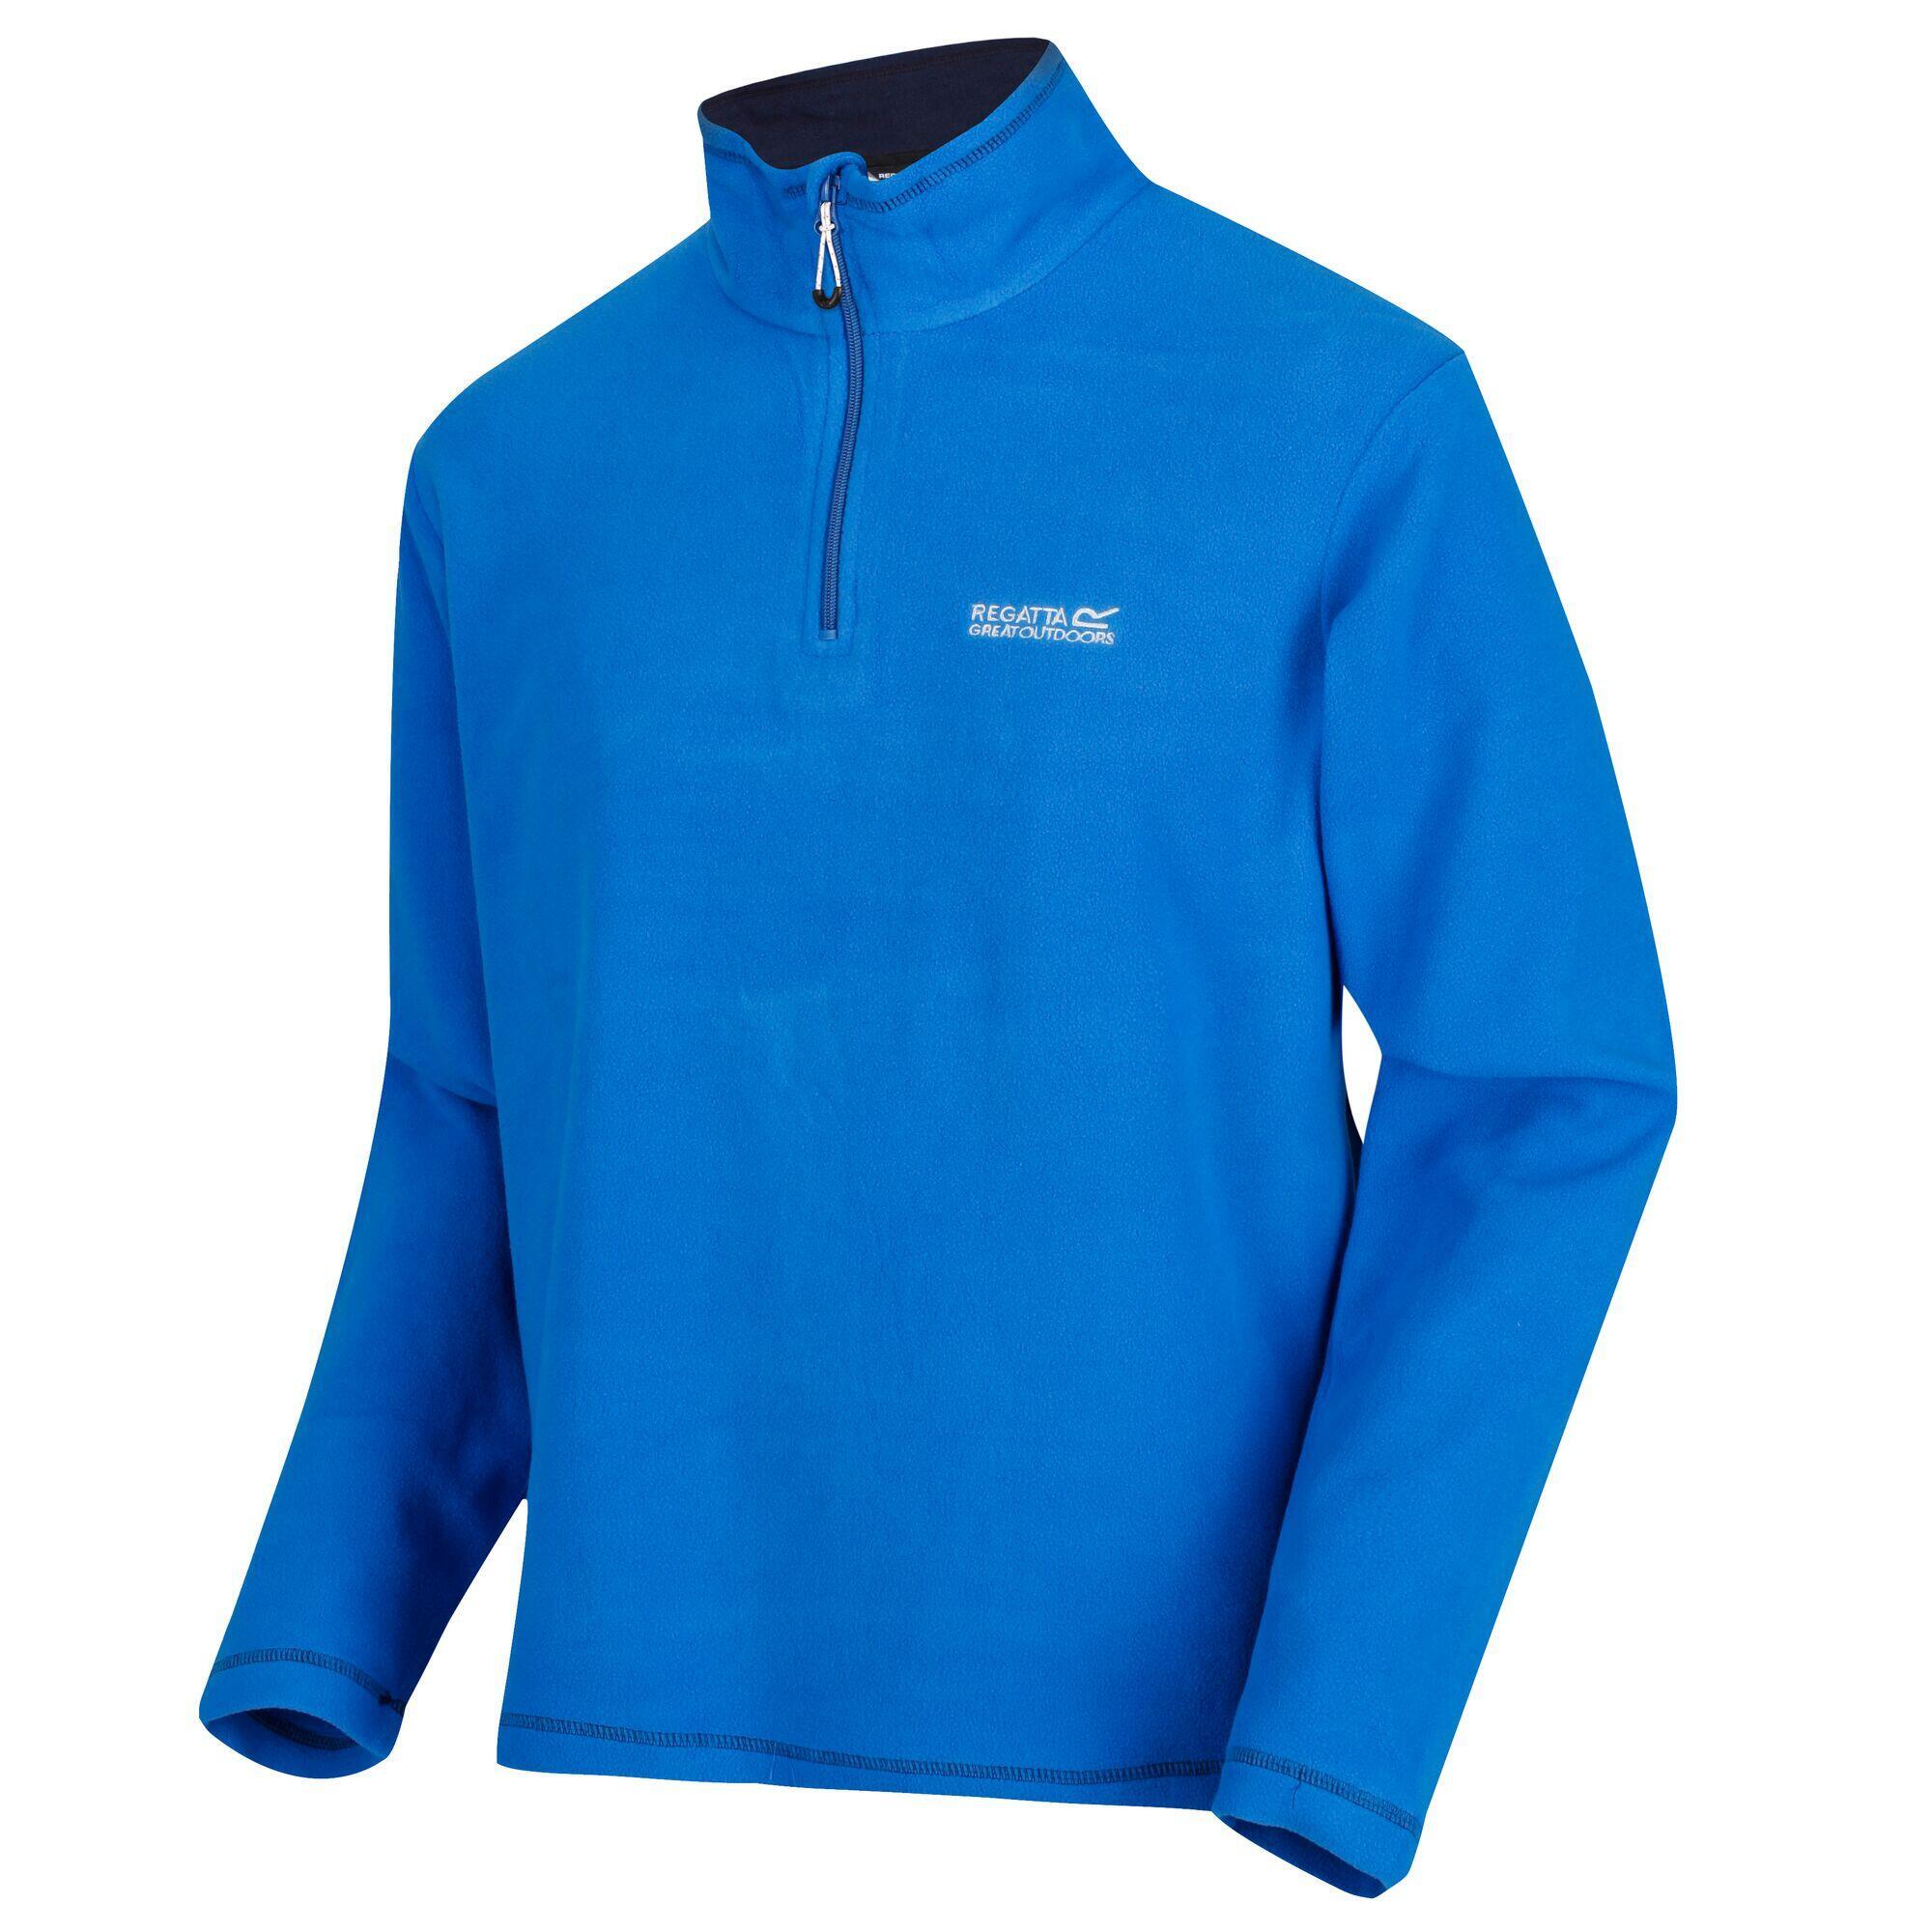 цена Куртка Regatta Thompson мужская флисовая, синий